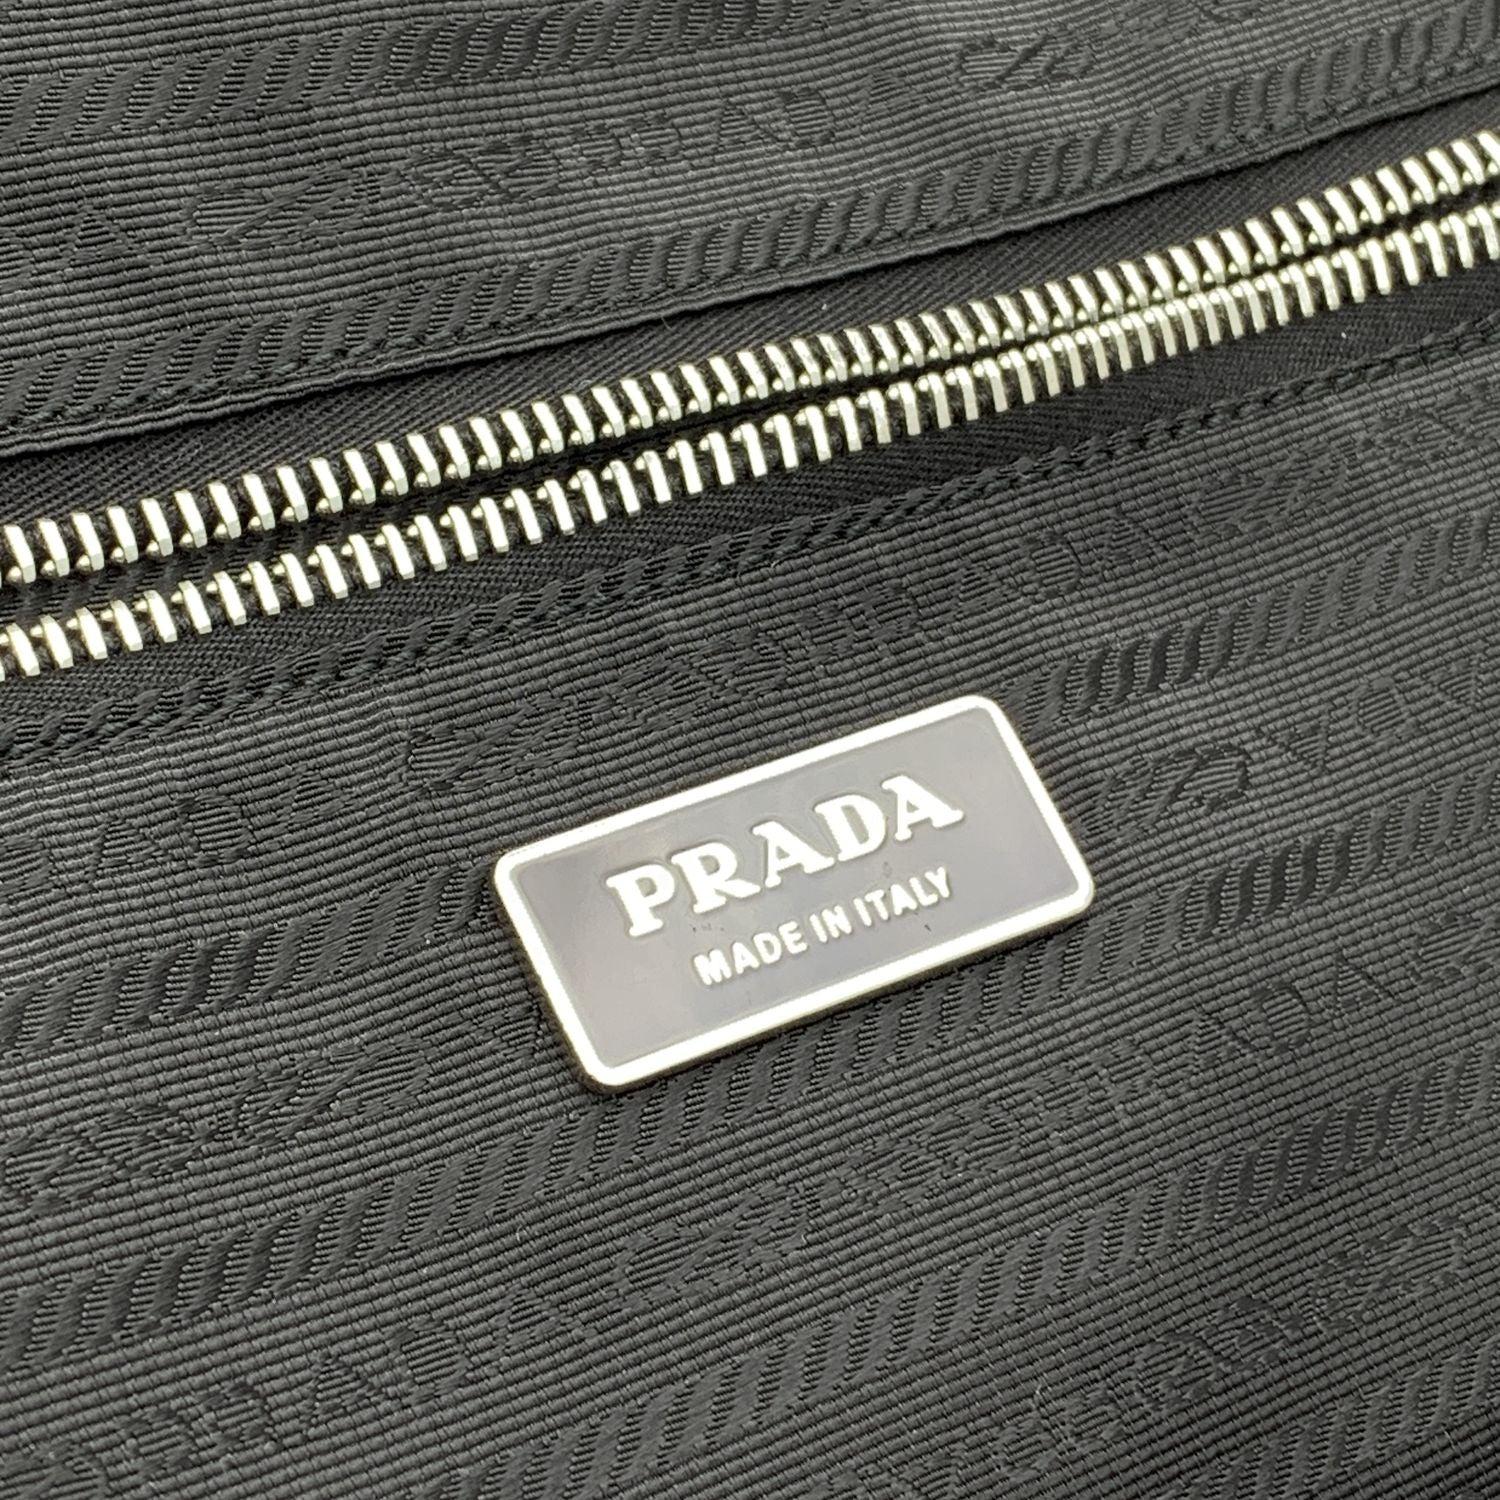 Prada Black Nylon Rolling Suitcase Trolley Luggage Travel Bag 3